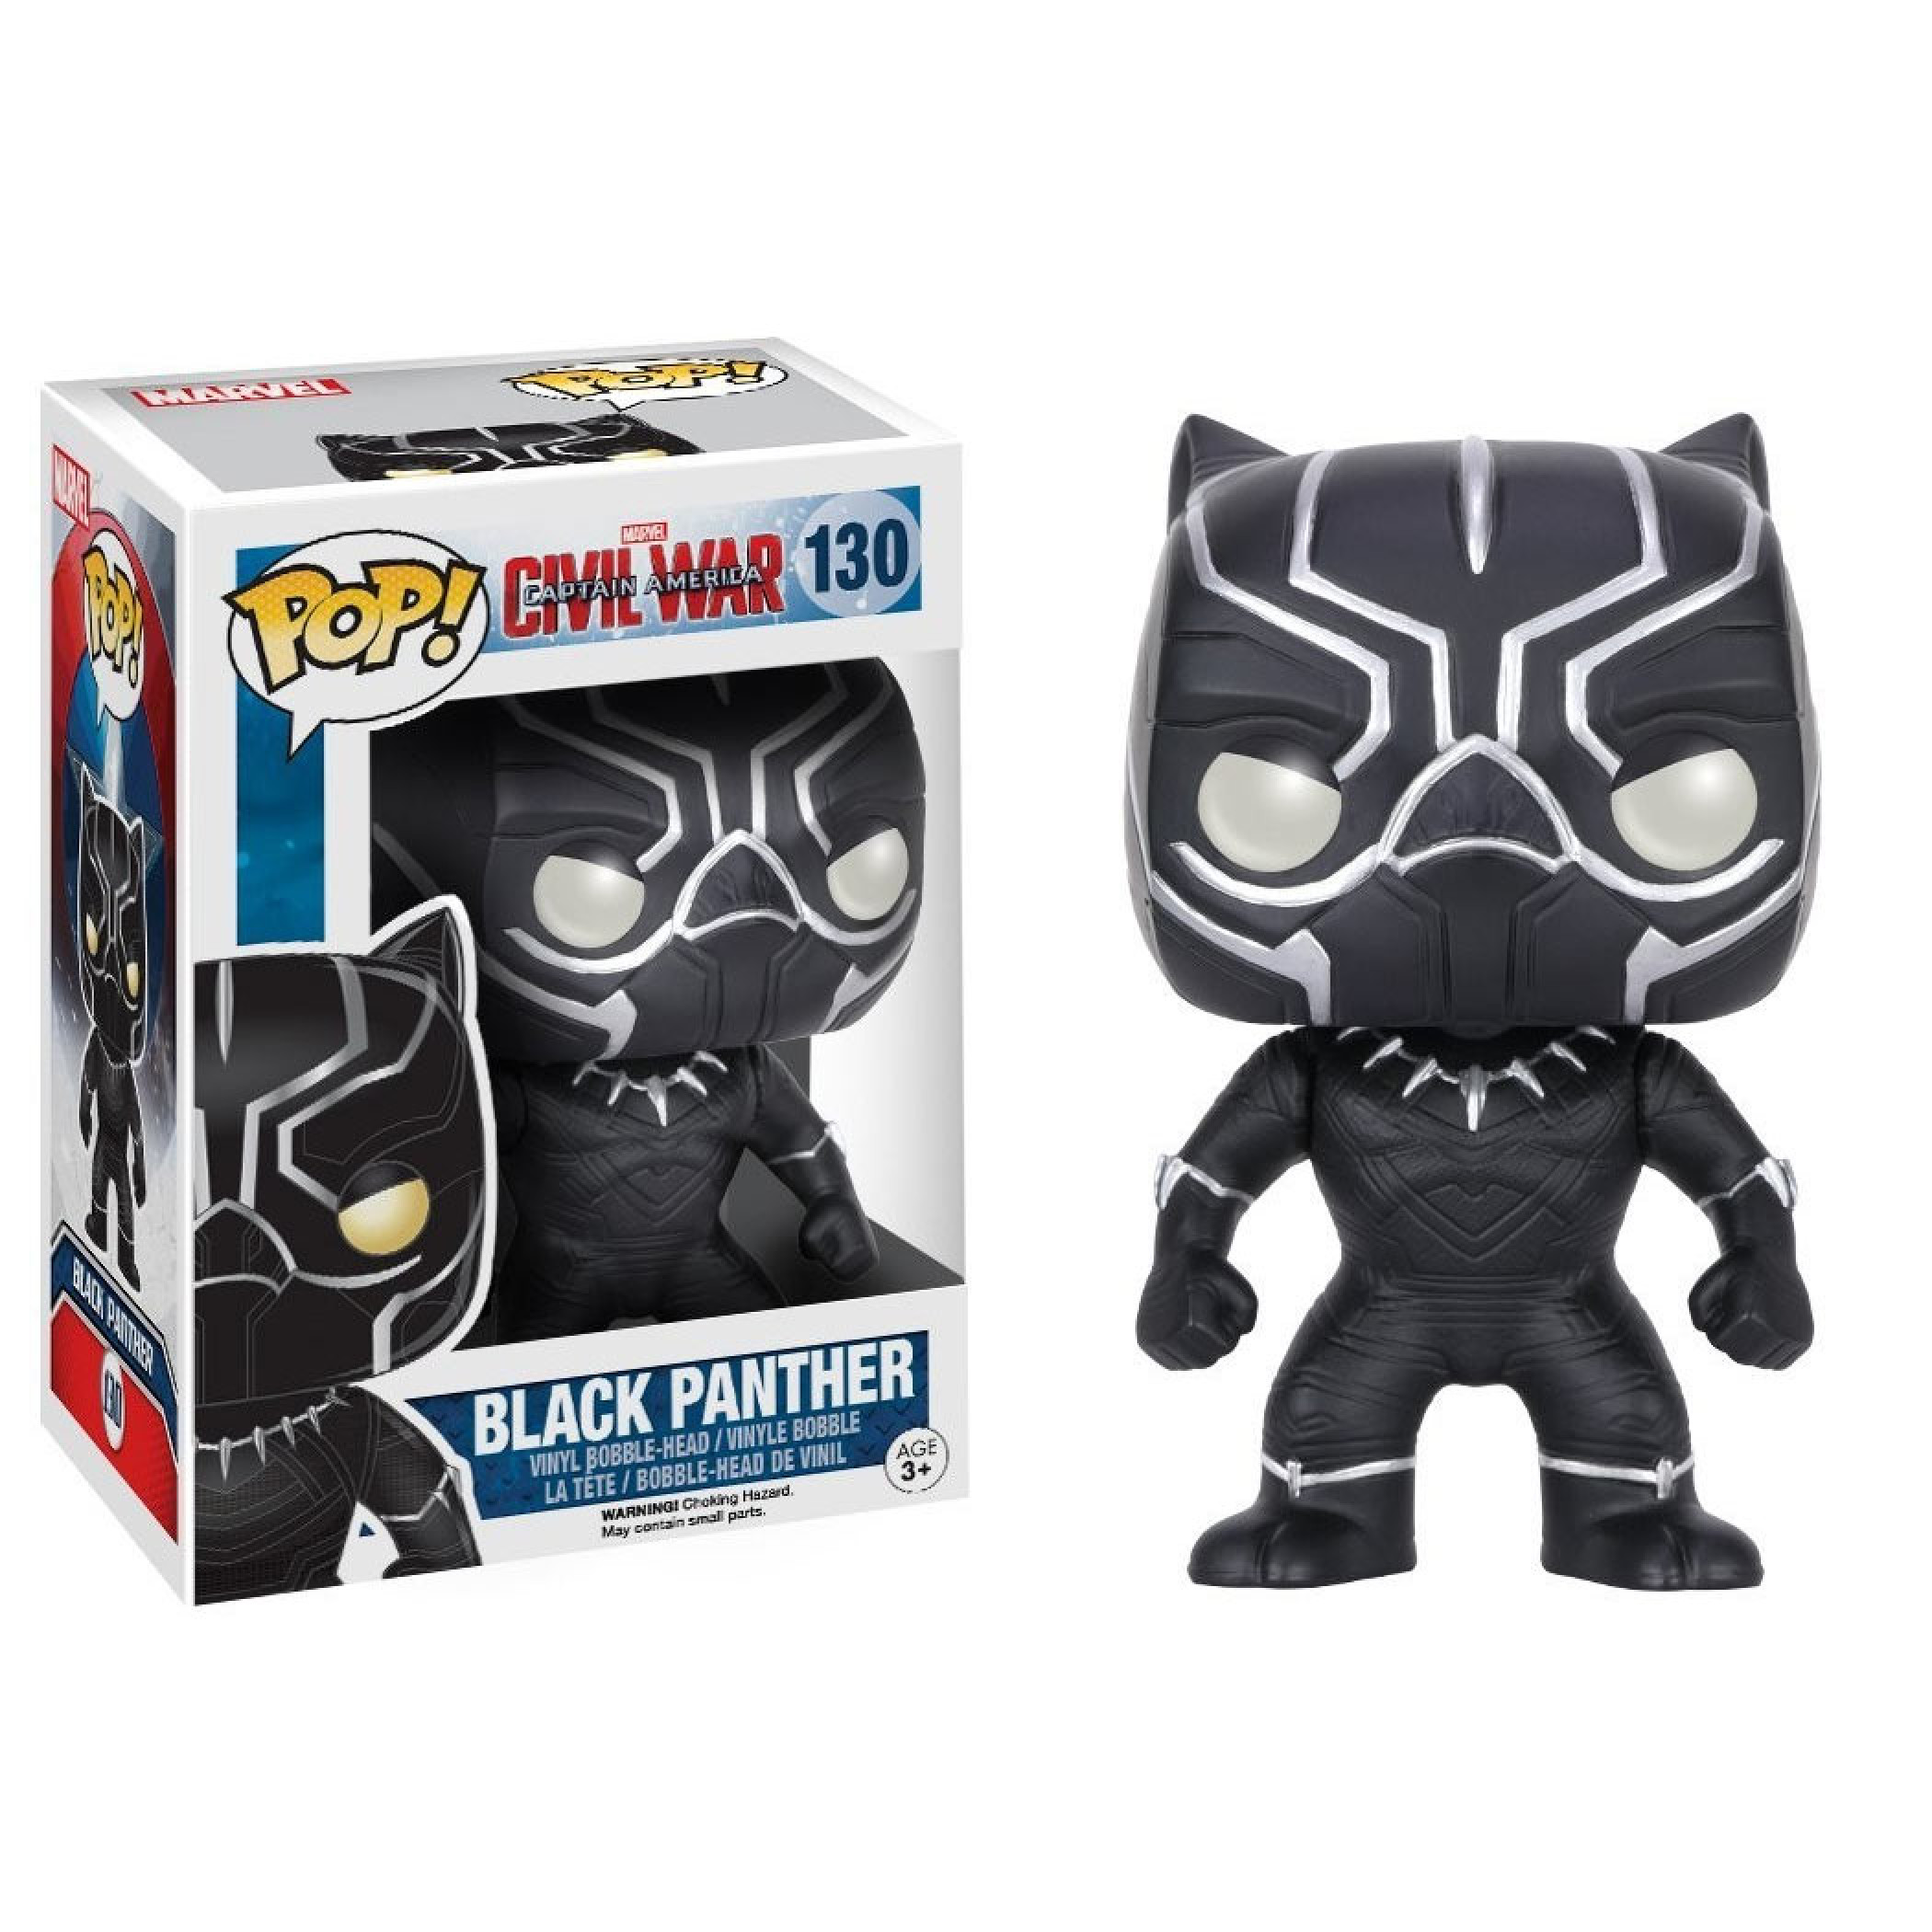 Black Panther Civil War Funko Pop! Bobble-Head